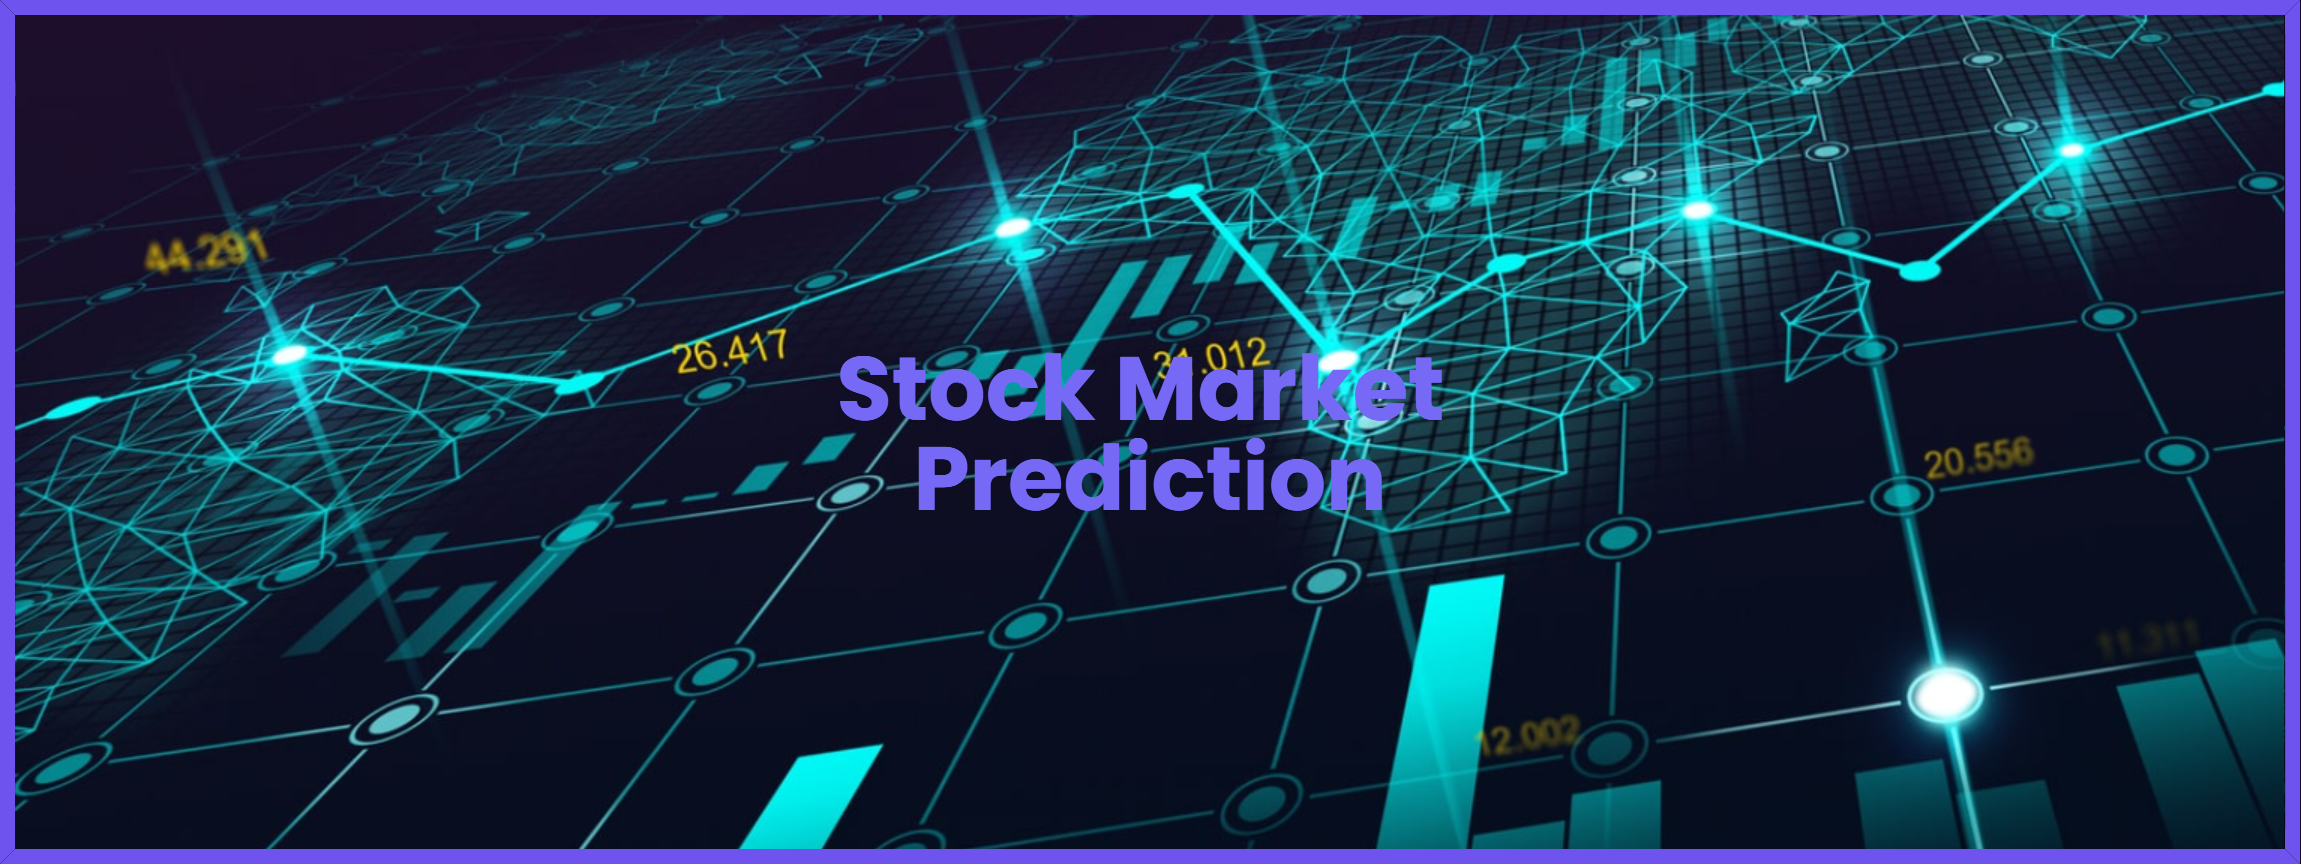 STOCK MARKET PREDICTION